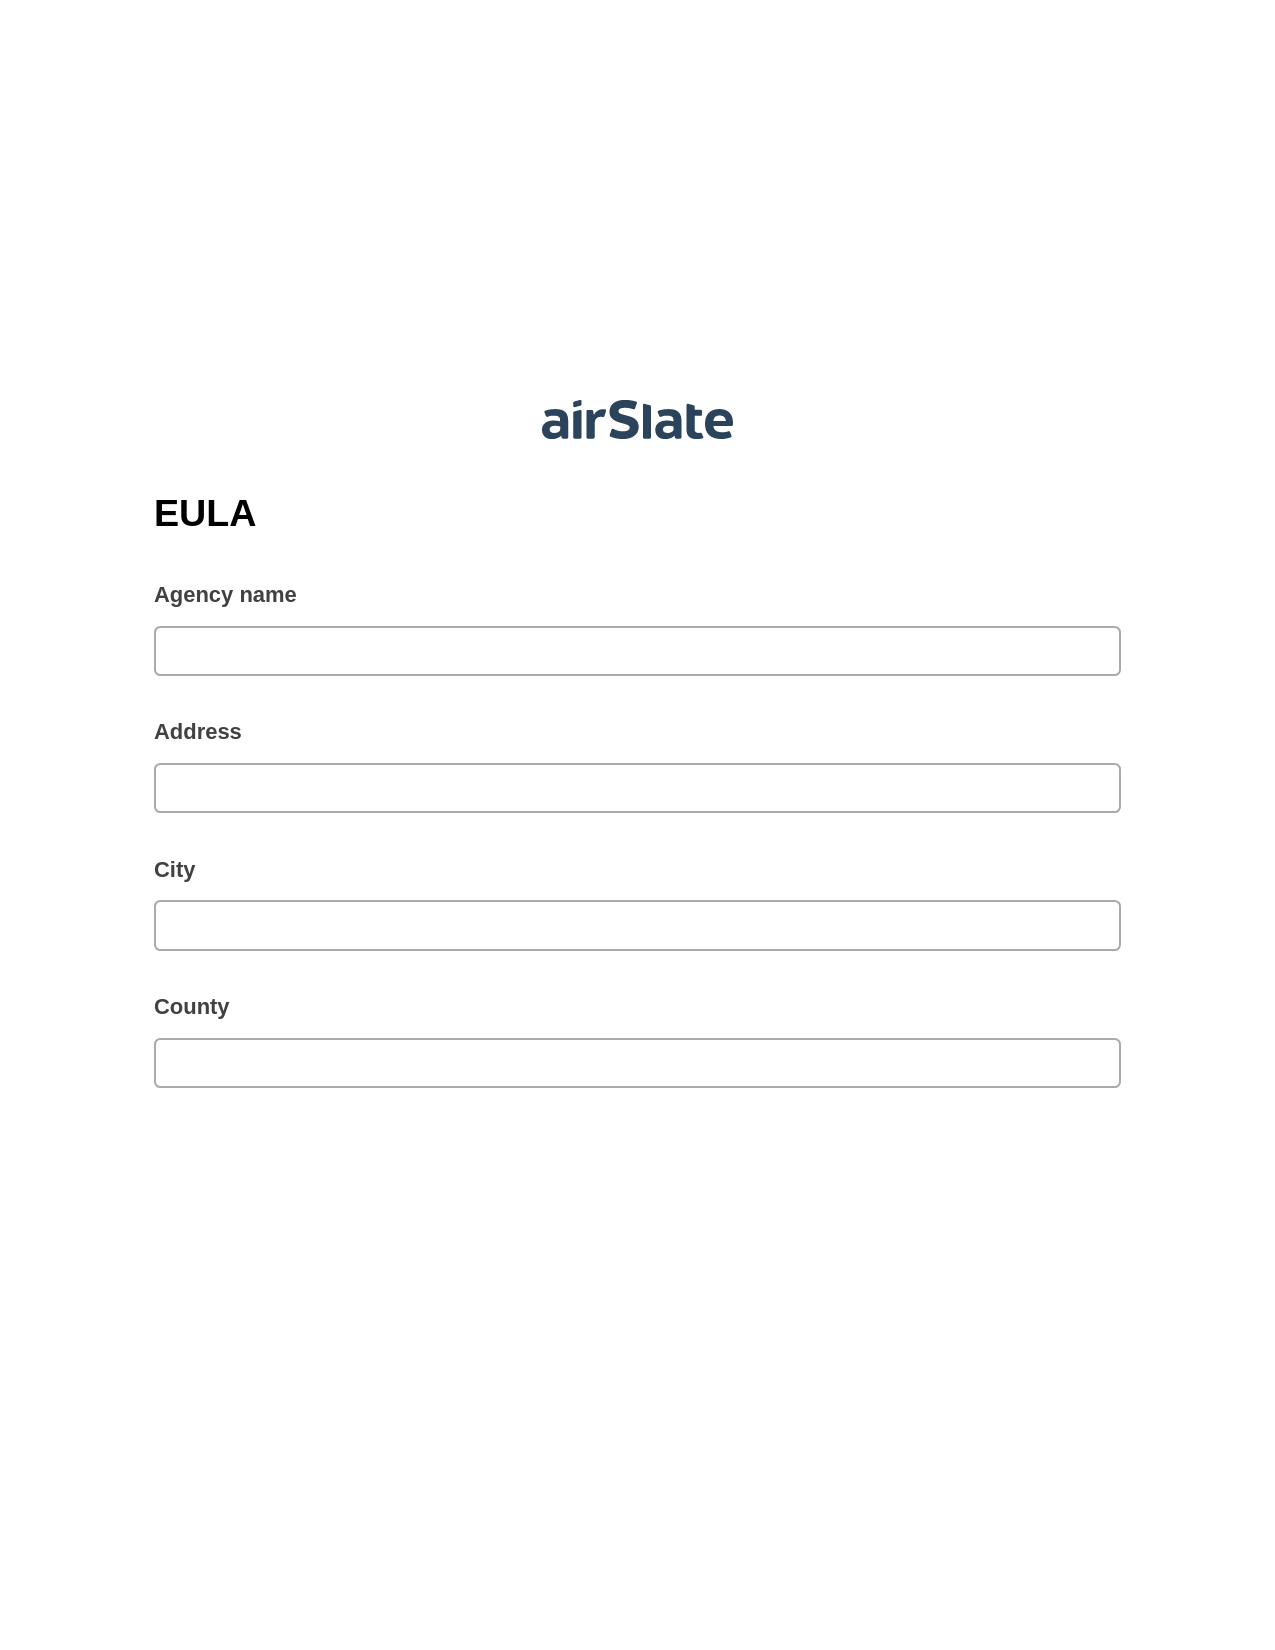 Multirole EULA Pre-fill from Salesforce Record Bot, Reminder Bot, Email Notification Postfinish Bot